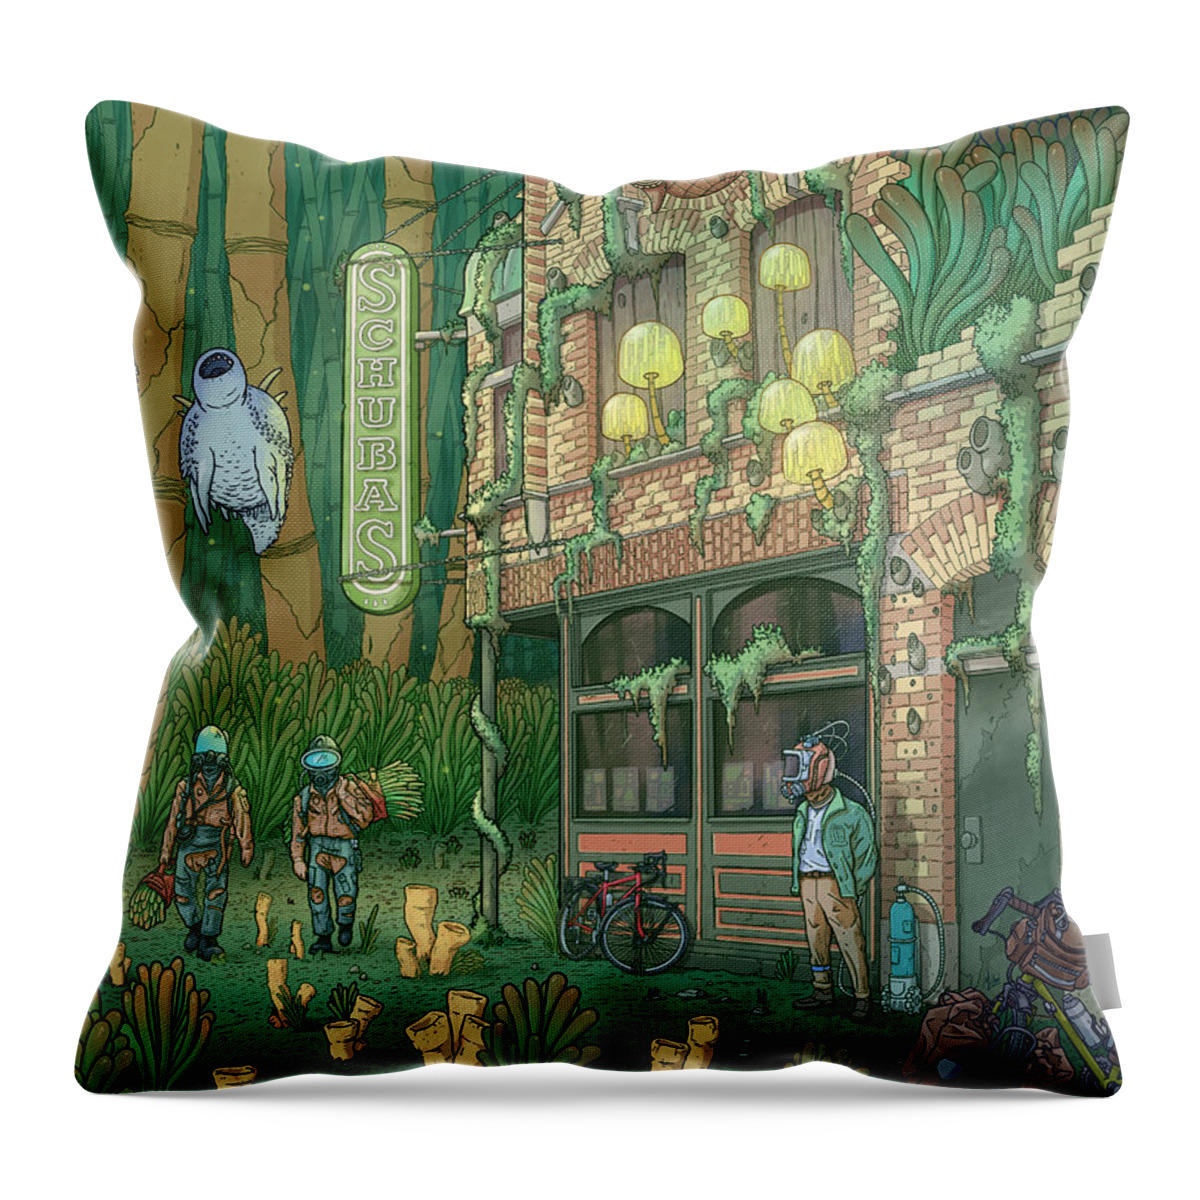  Throw Pillow featuring the digital art Schubas Tied House by EvanArt - Evan Miller